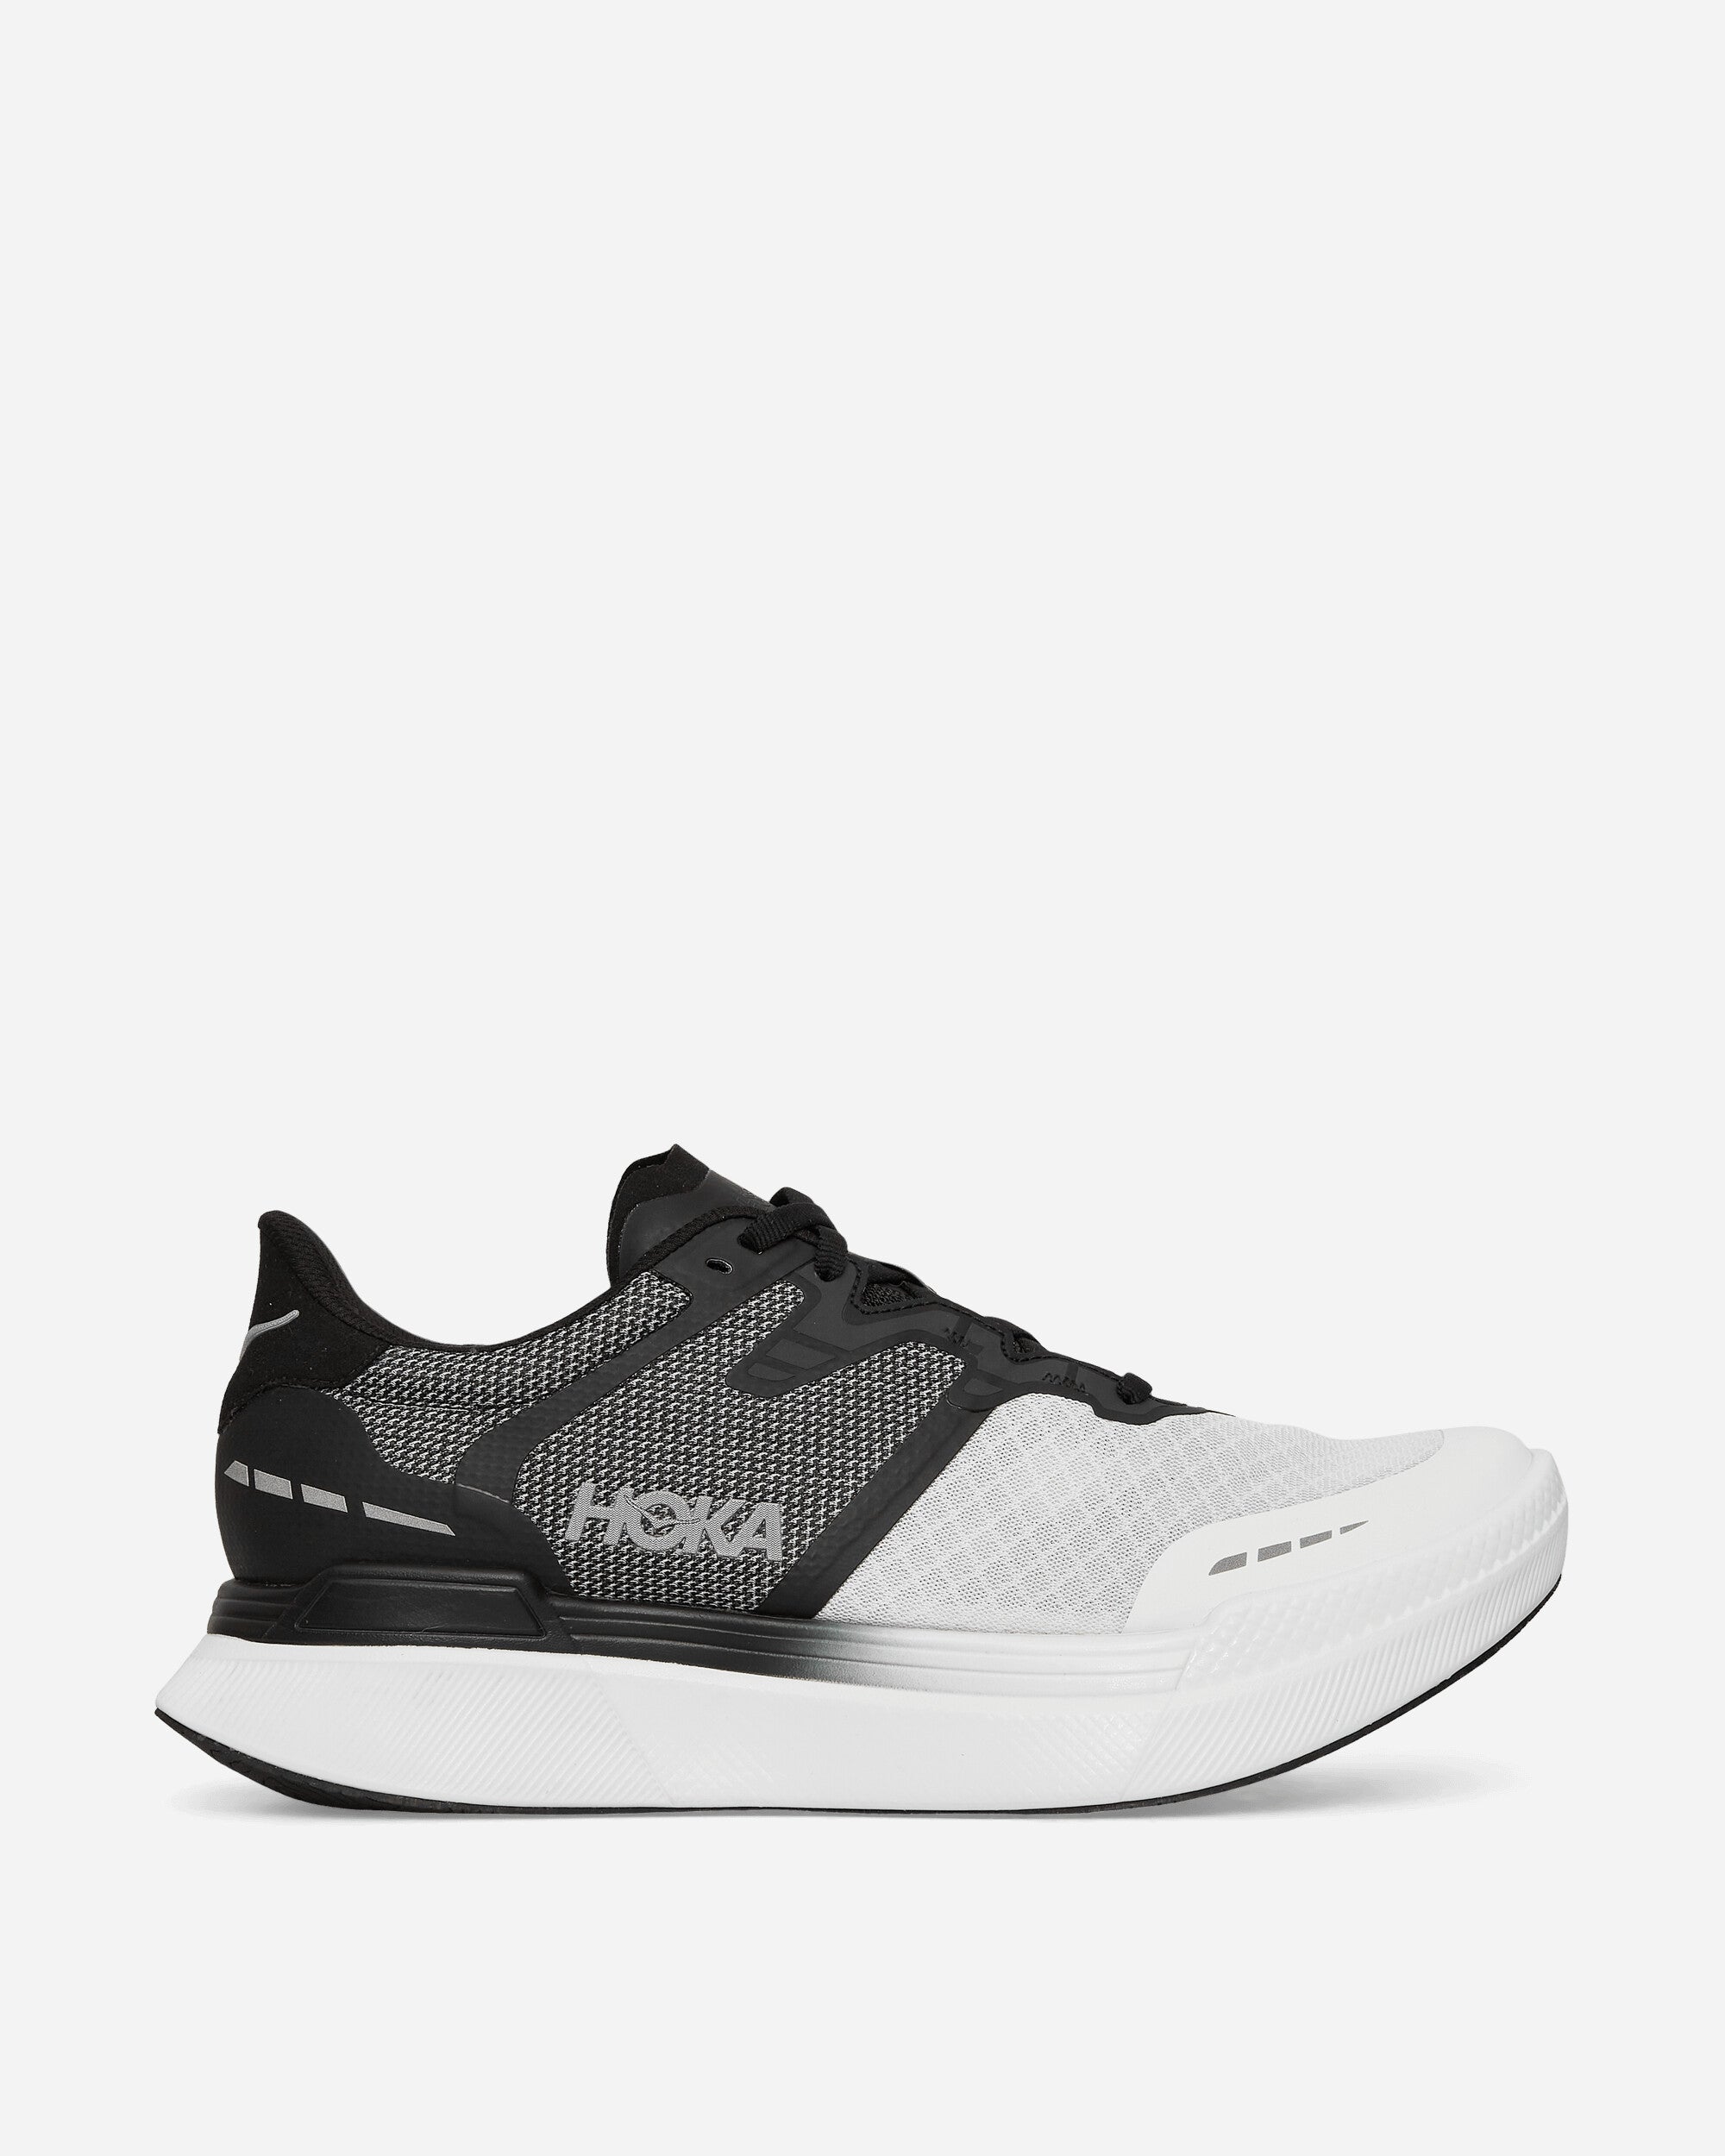 Hoka One One Transport X Sneakers Black / White - Slam Jam Official Store